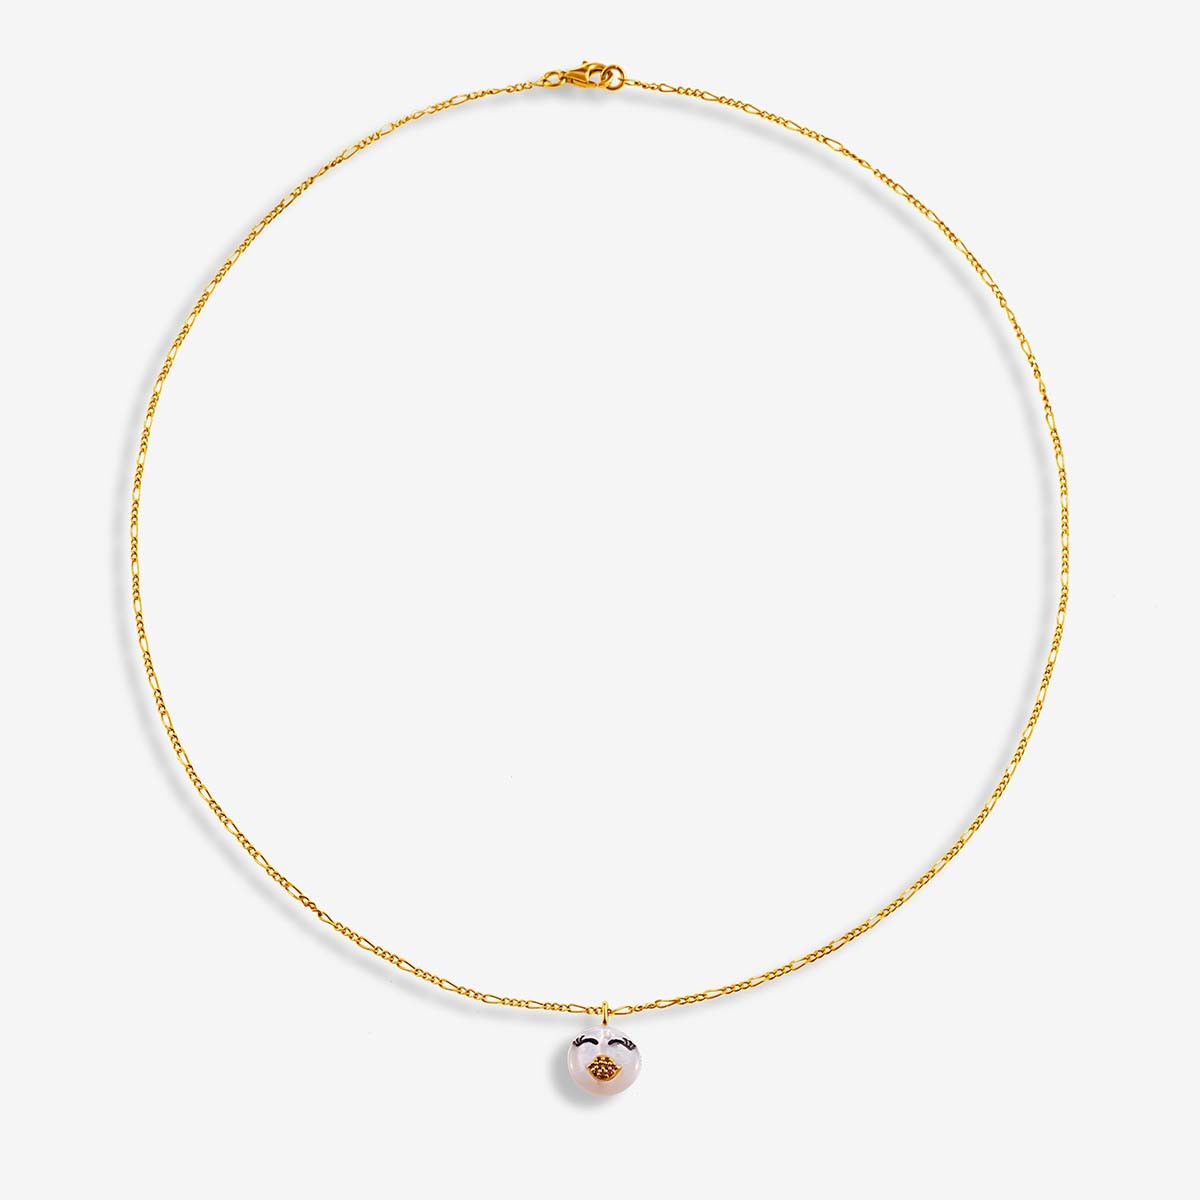 Rebel Lovely Necklace - Halsketten - Weiß - 18k vergoldet